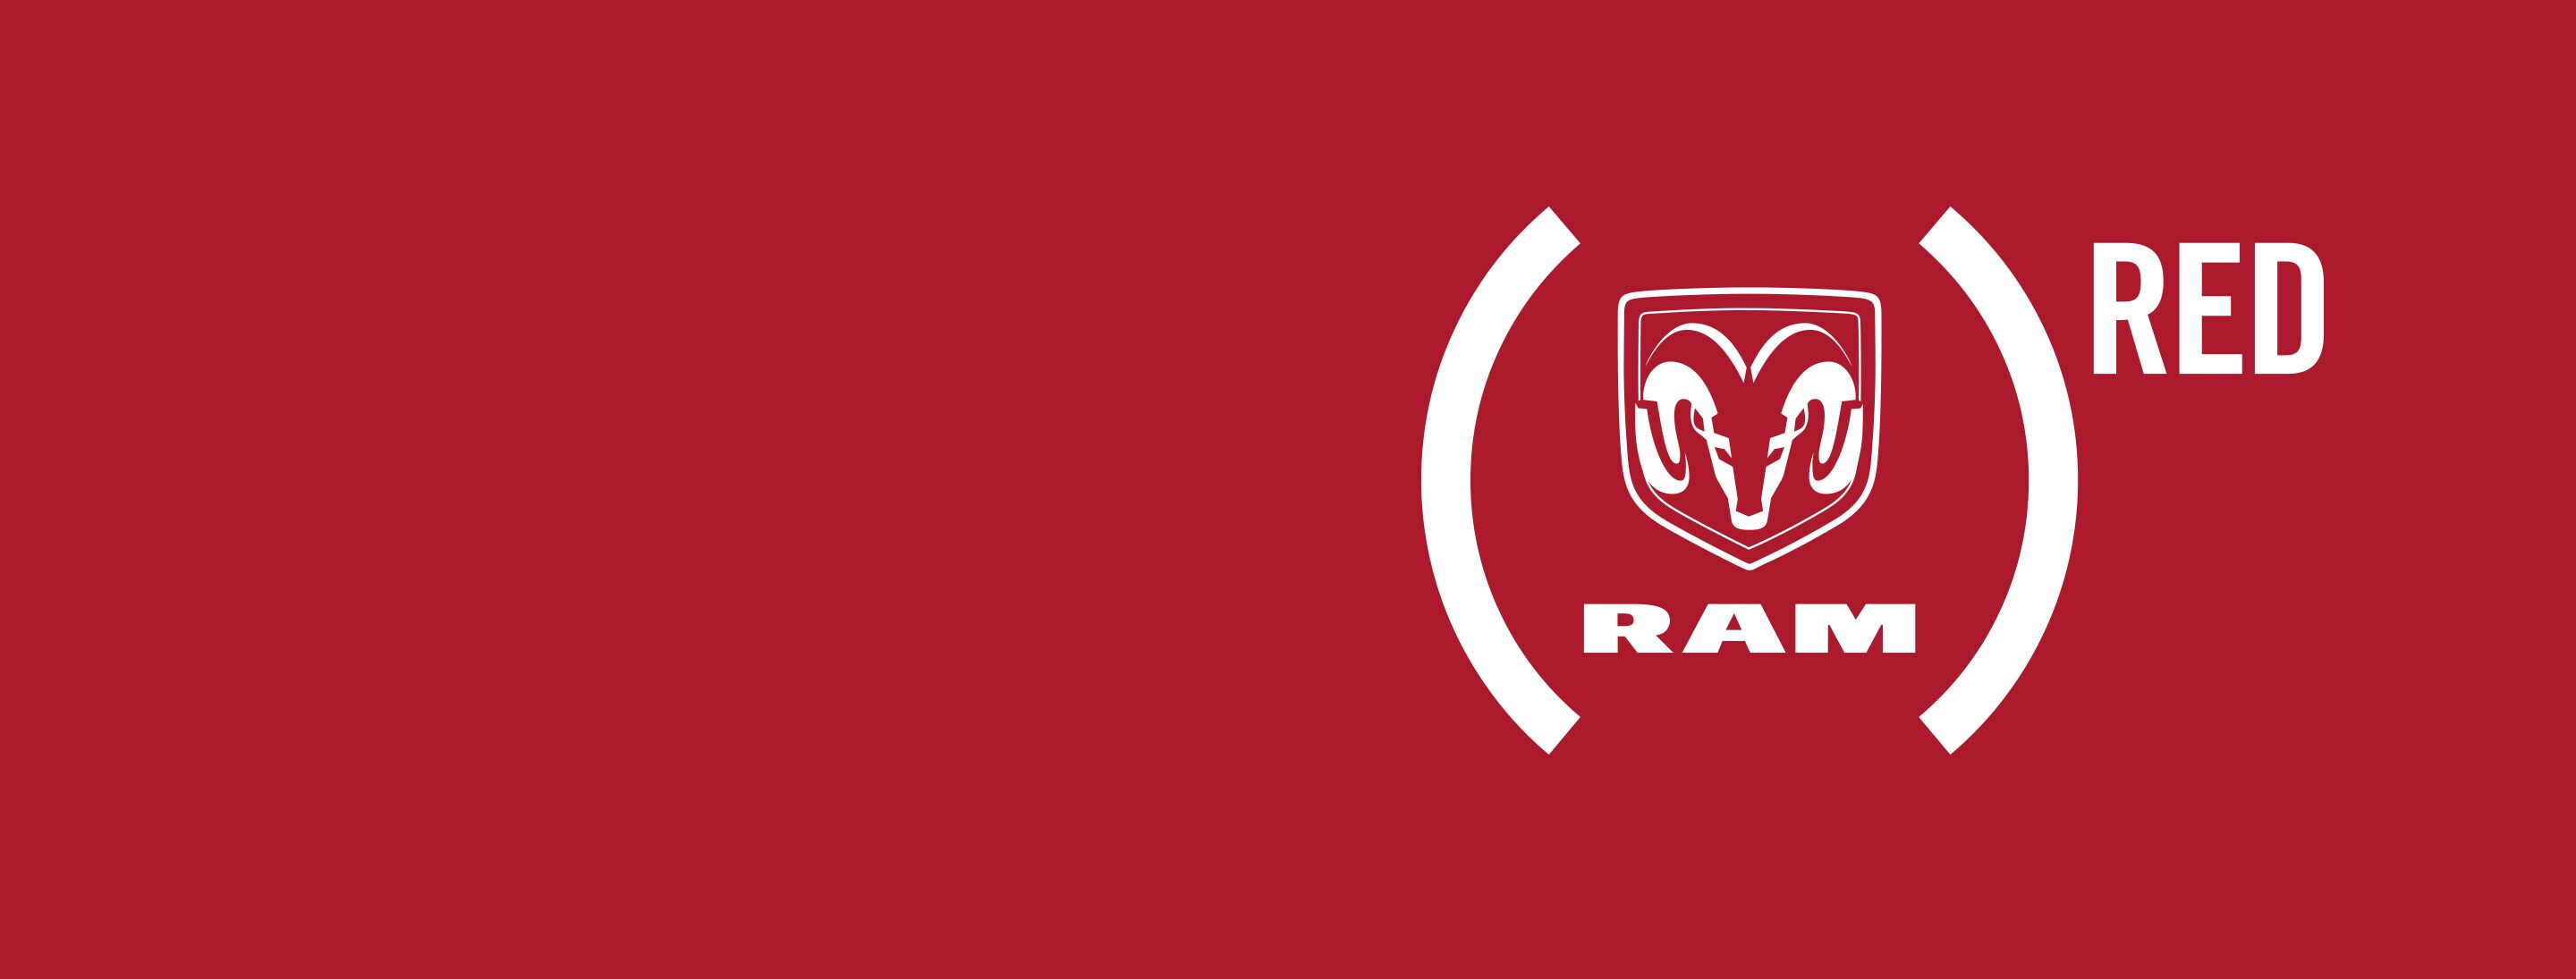 Logo de Ram Red.